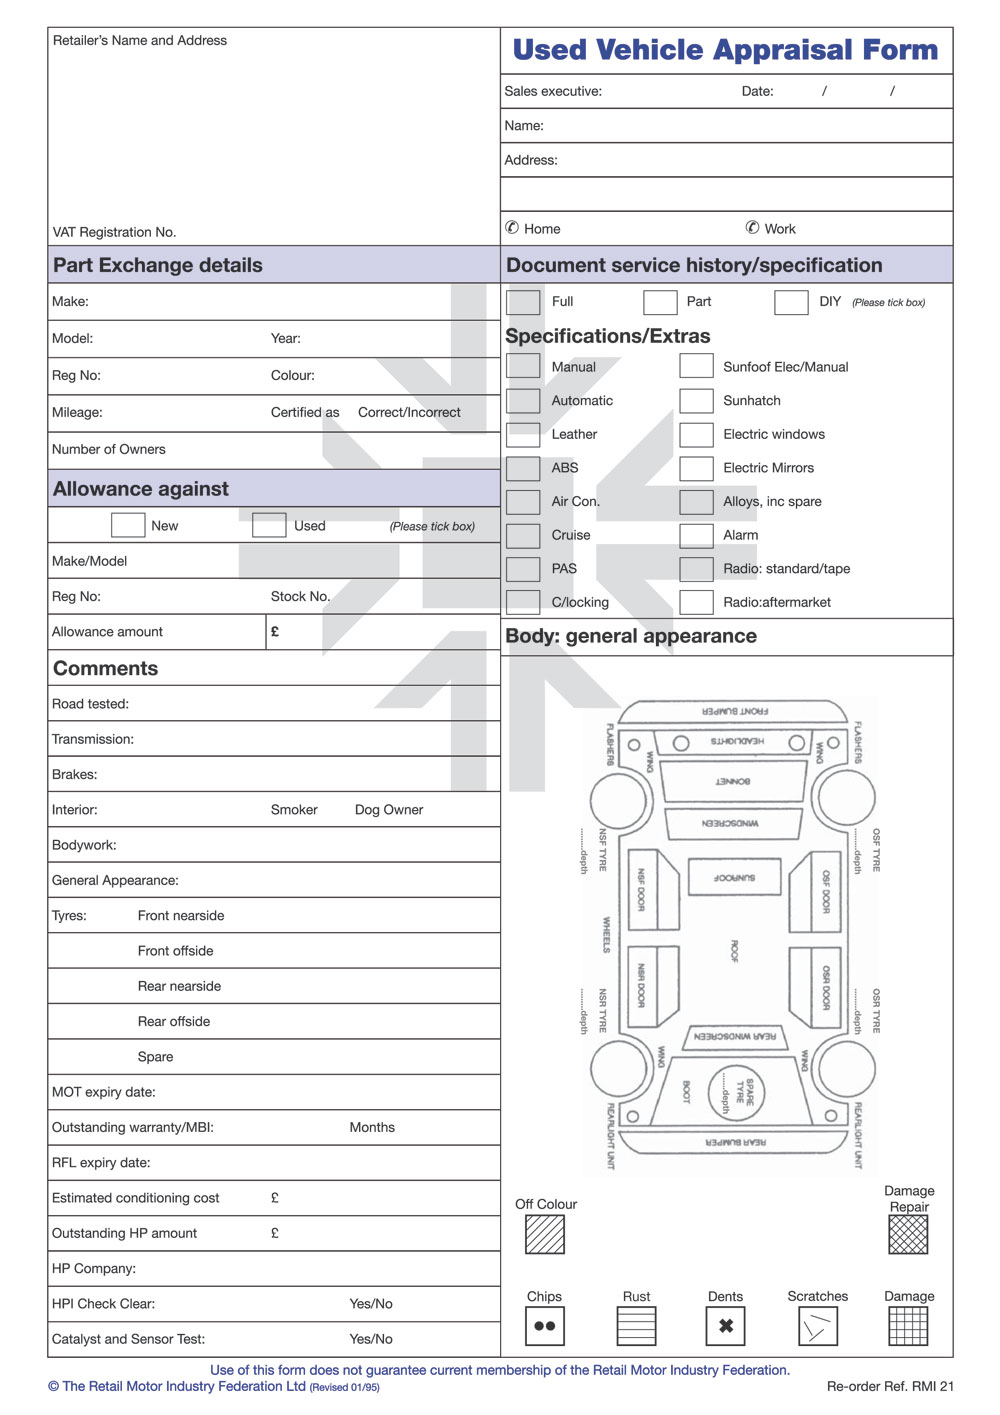 RMI021   Used Vehicle Appraisal Form Pad   RMI Webshop